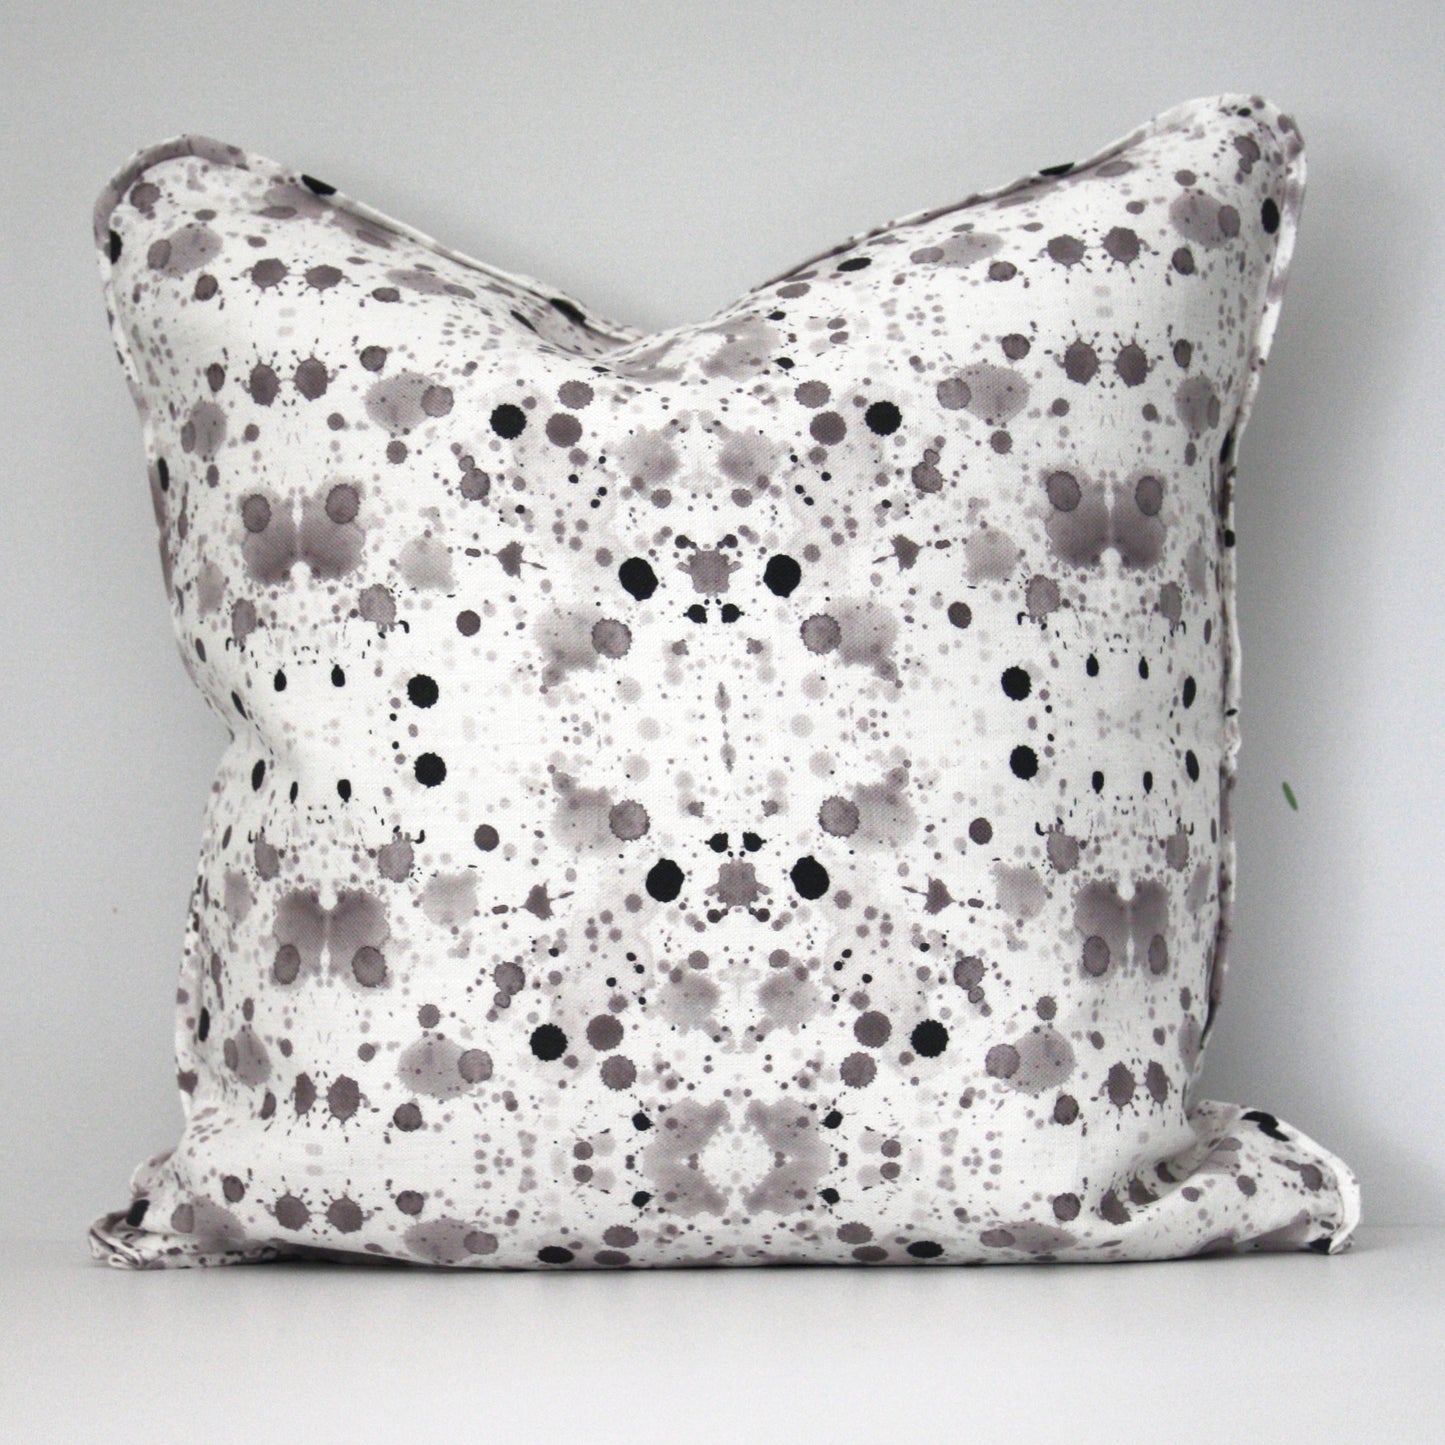 Splatter Pillow in Stone Grey